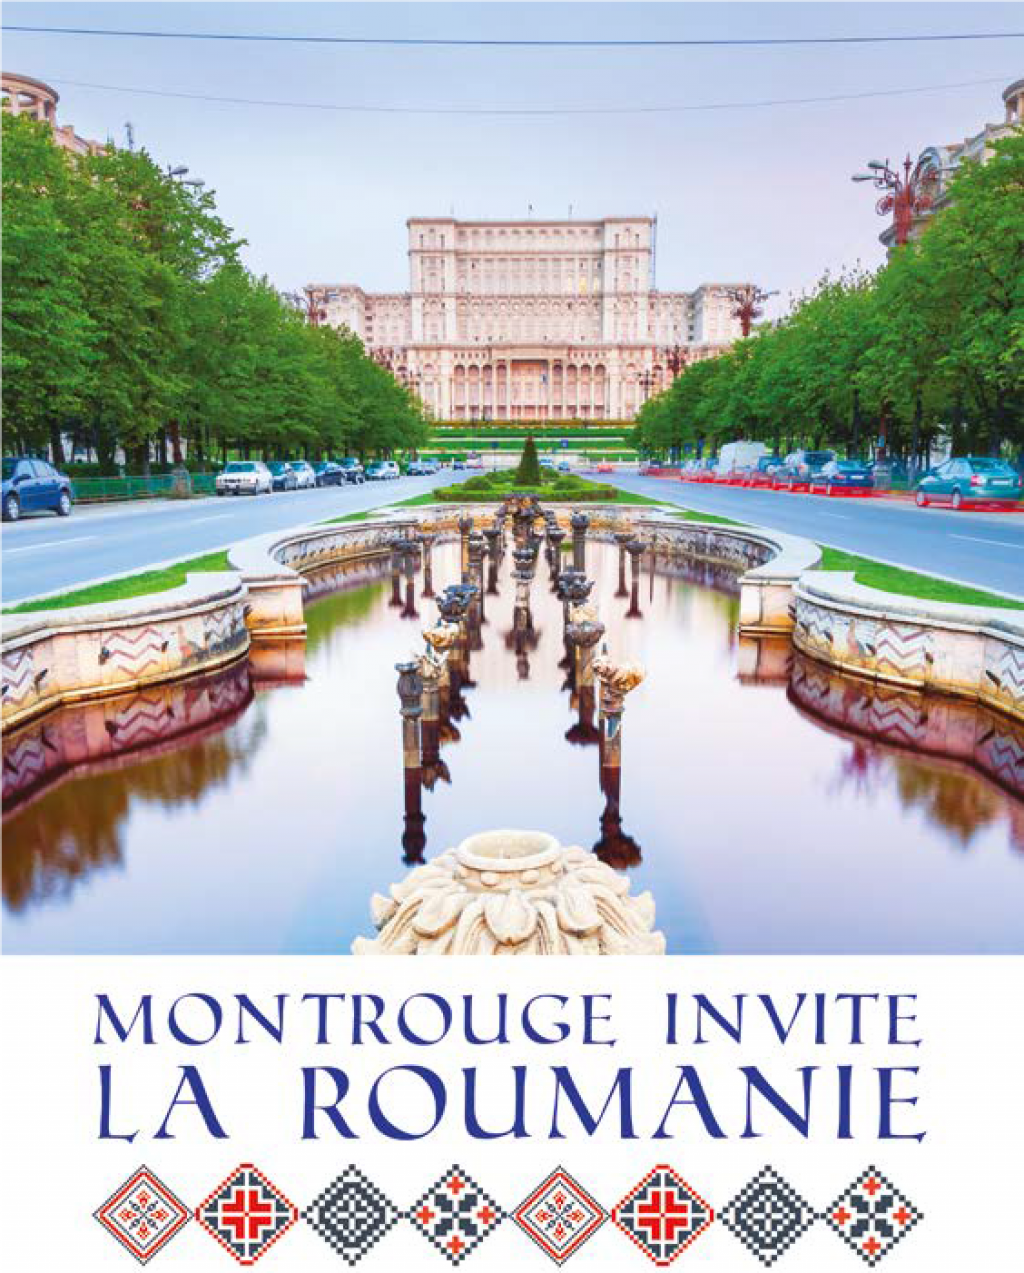 Montrouge invita Romania